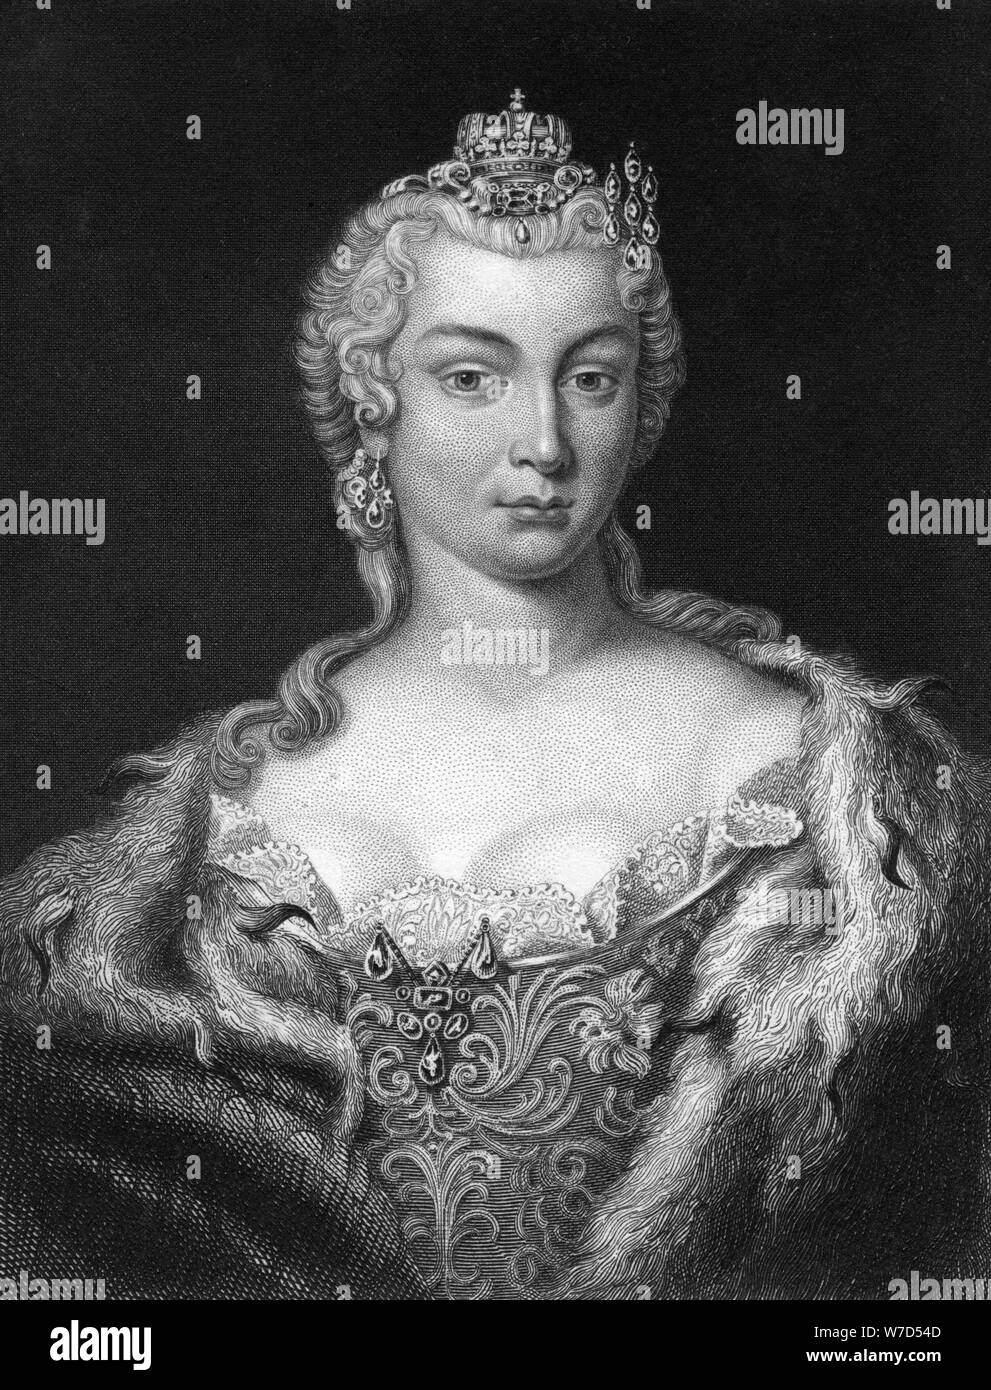 Imperatrice Maria Theresa d'Austria e Regina di Ungheria e di Boemia.Artista: J Hinchcliff Foto Stock